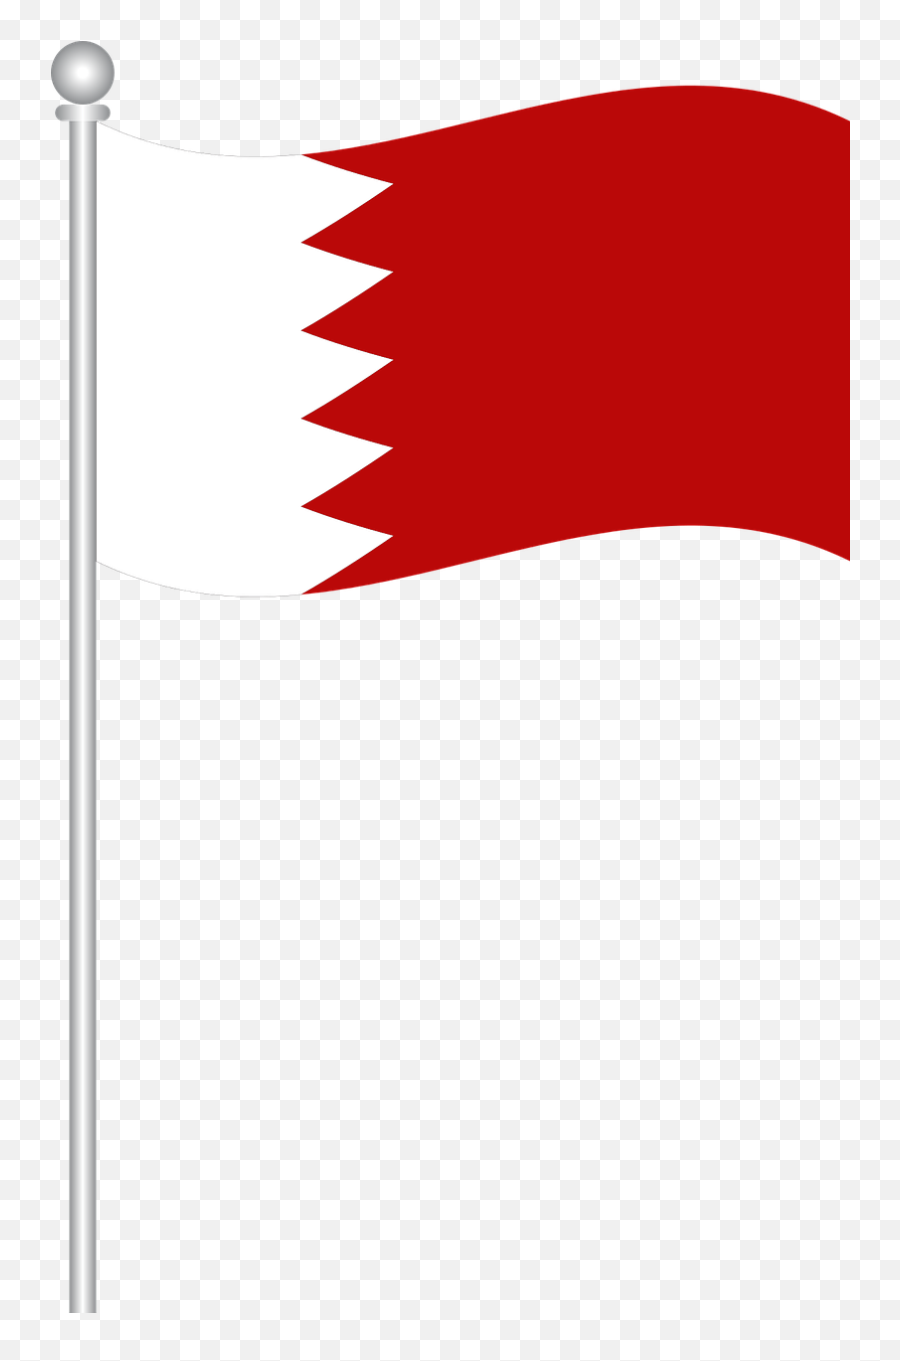 Download Free Photo Of Flag Of Bahrainbahrainflagworld Emoji,German Flag Clipart